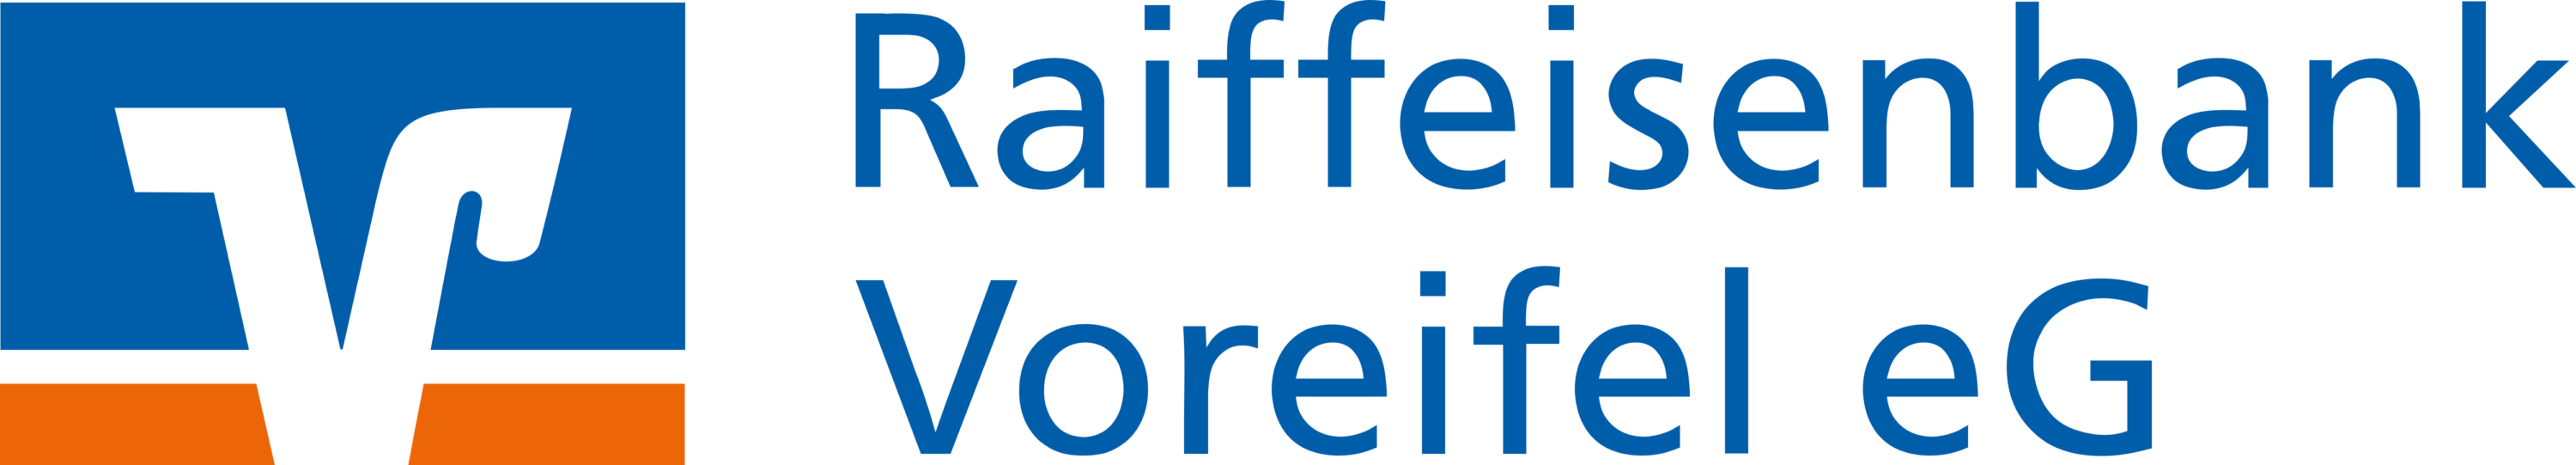 Raiffeisenbank Voreifel eG Logo